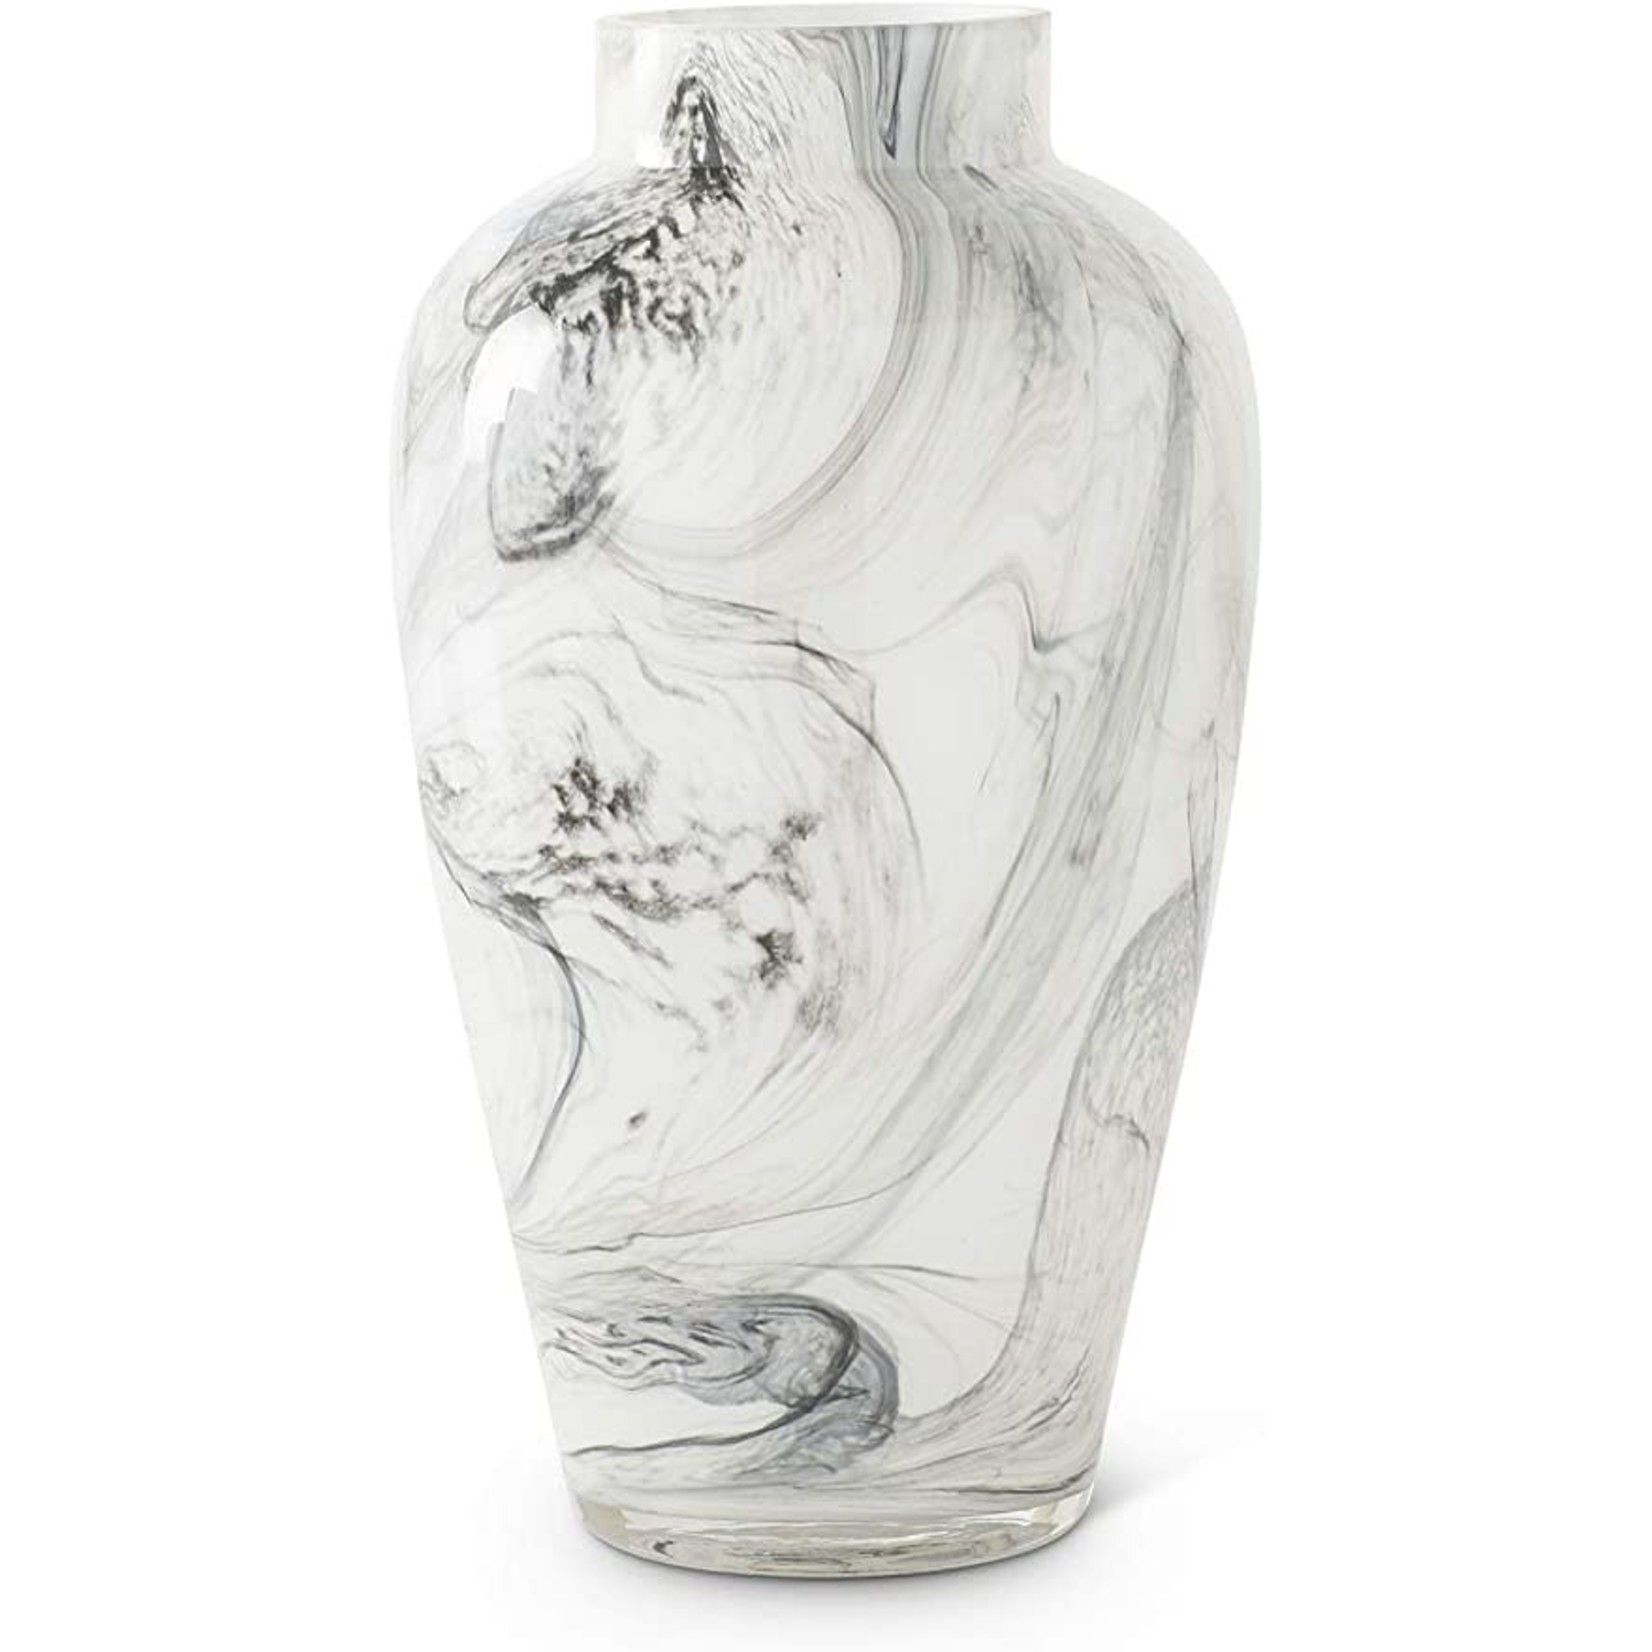 16553A-2 White and Smokey Black Swirl Glass Vases 13 Inch